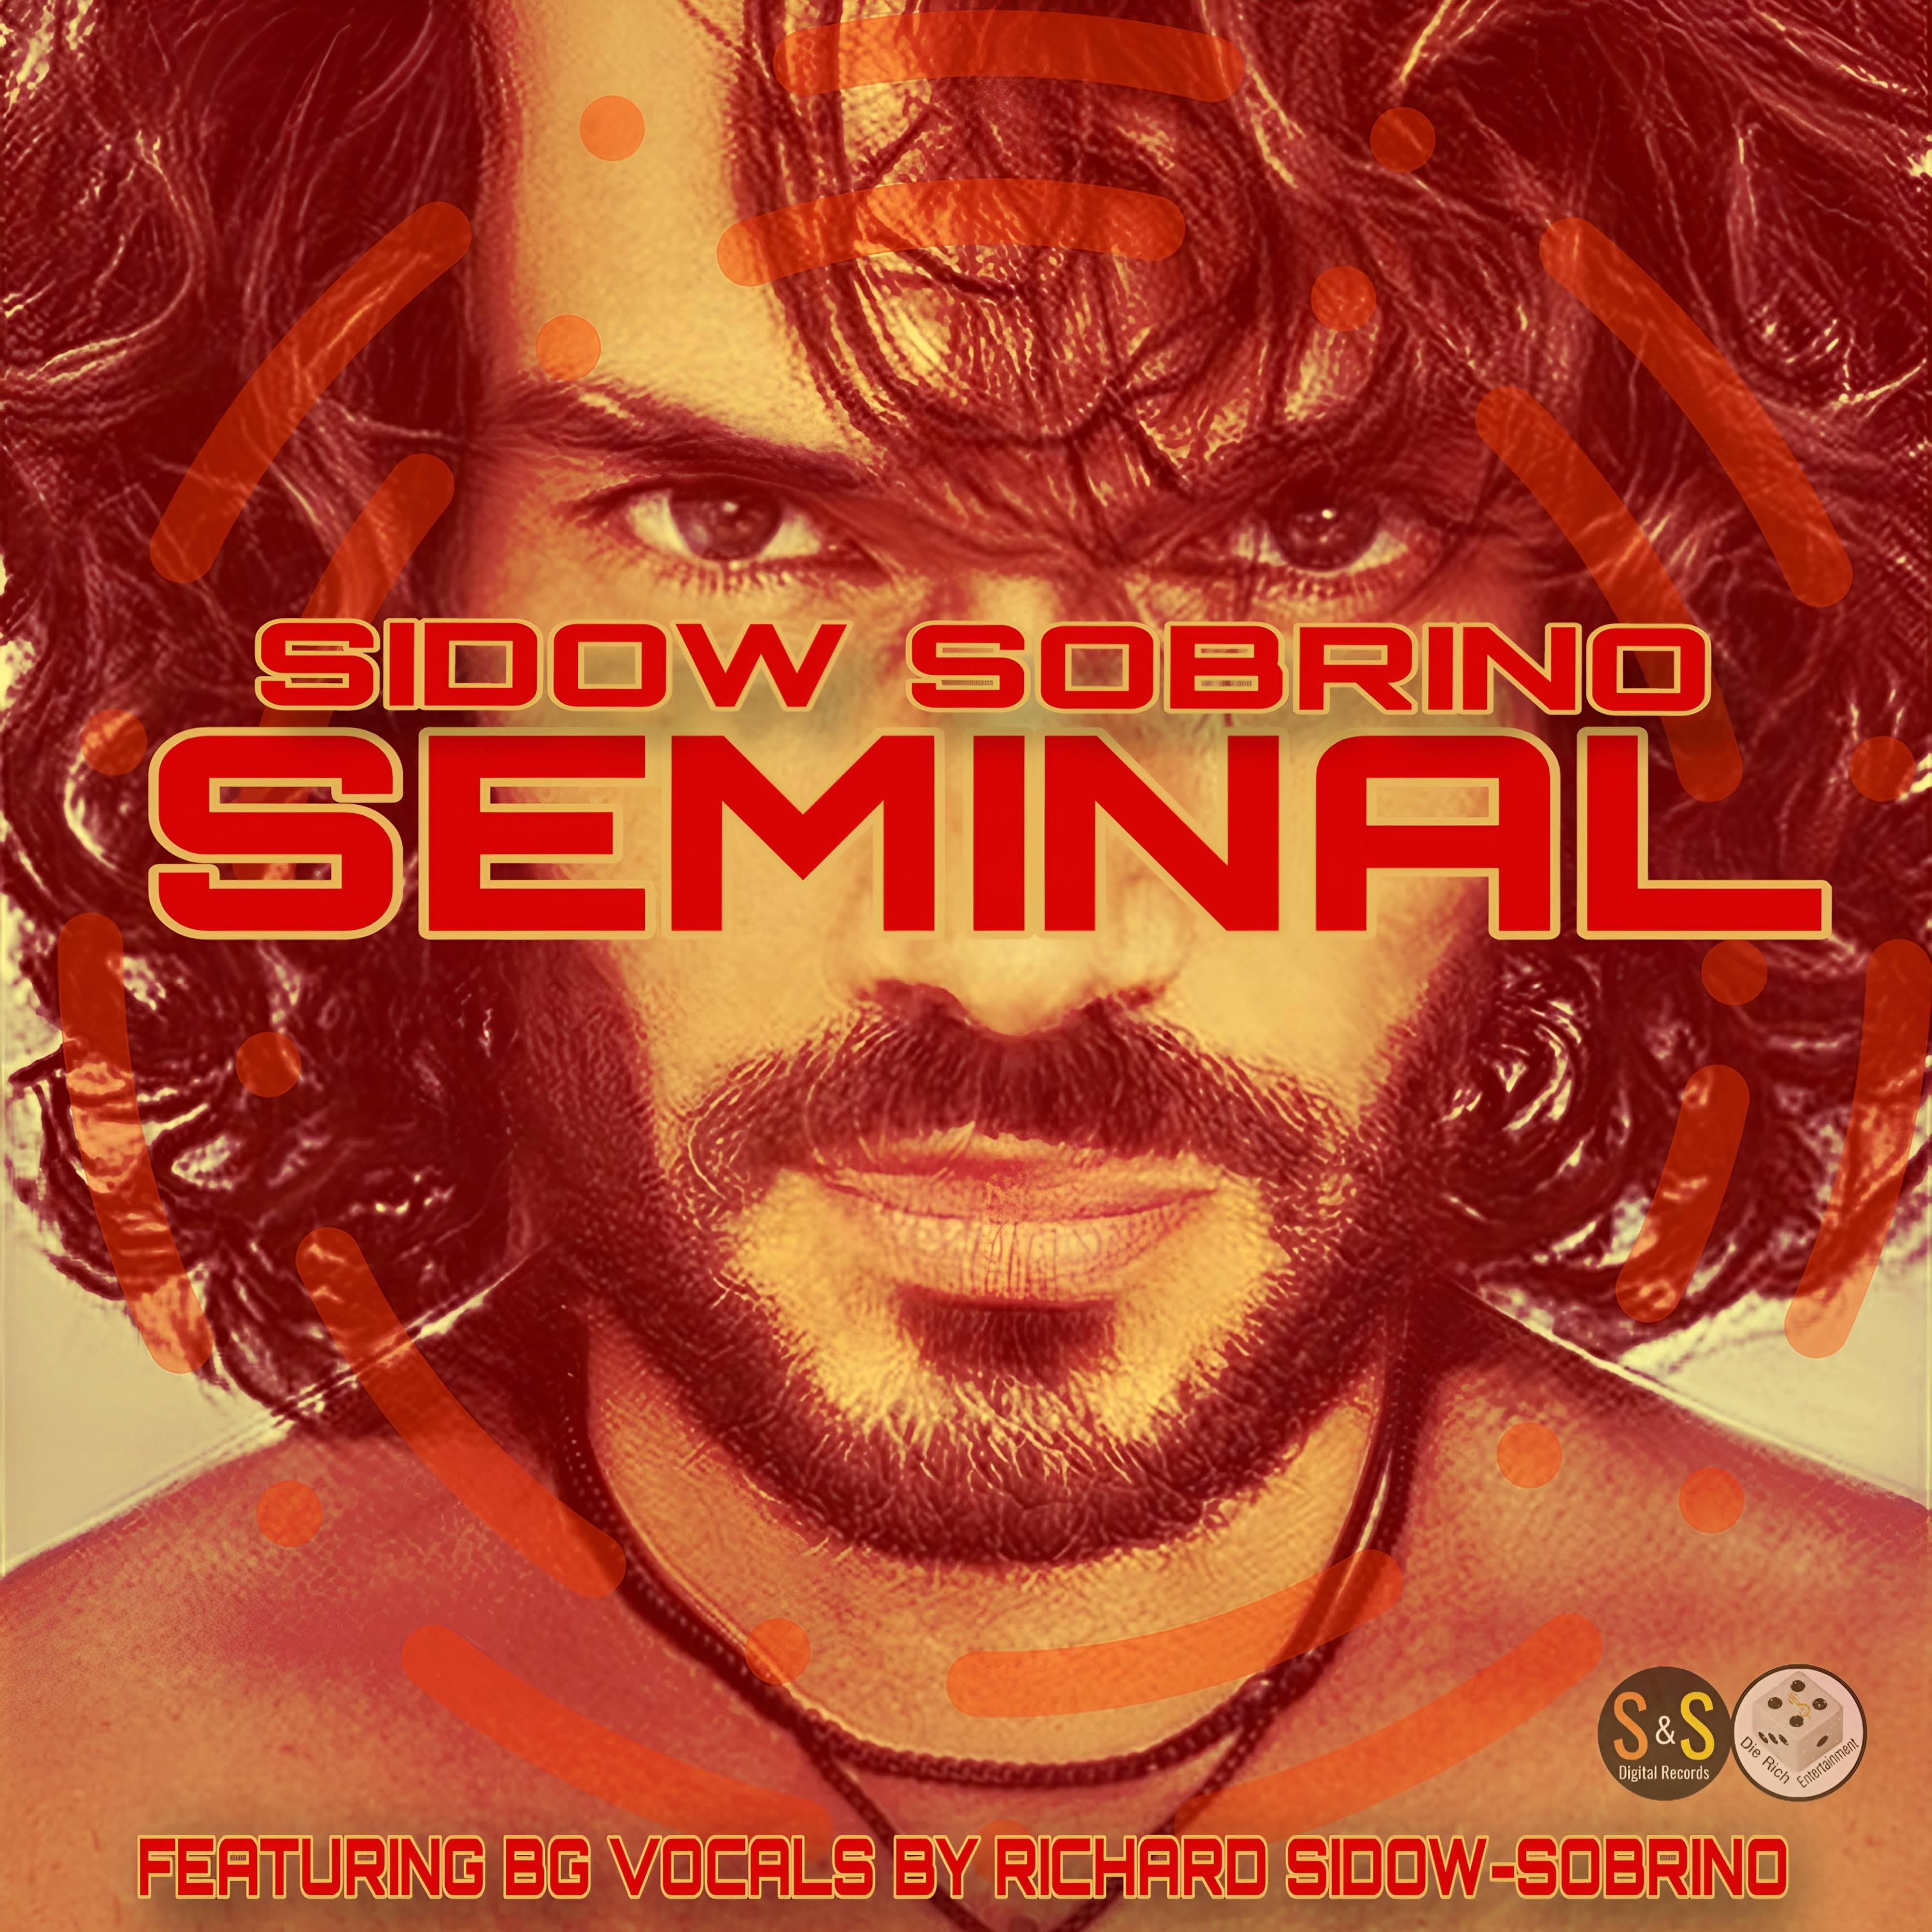 Sidow Sobrino - The World's No.1 Superstar - Seminal Album Cover Art